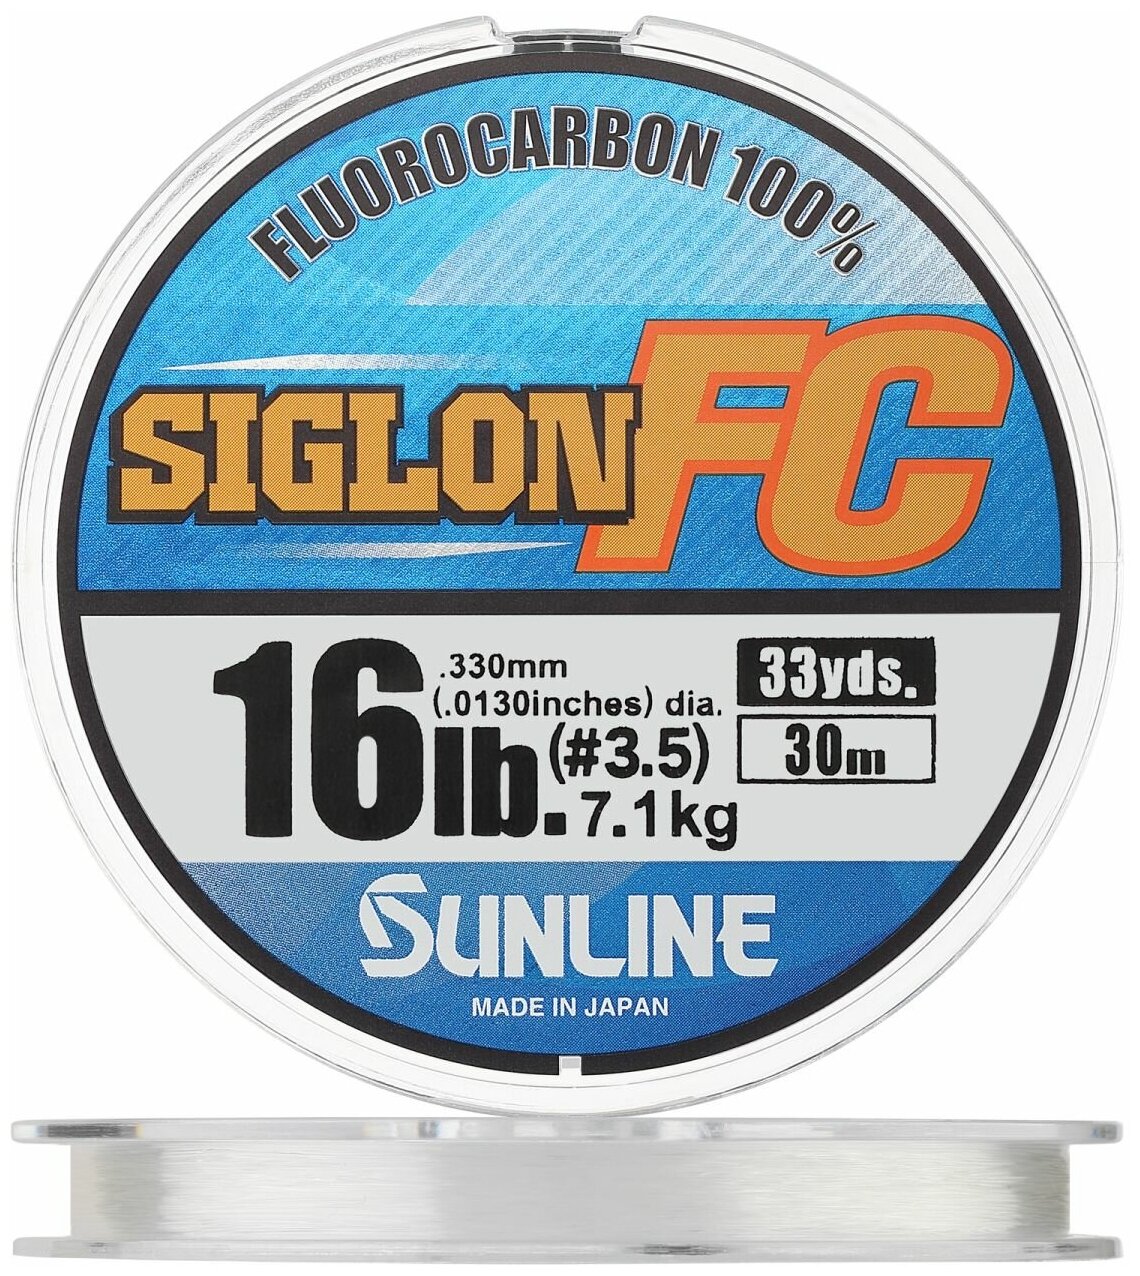 Флюорокарбоновая леска Sunline SIGLON FC 2020